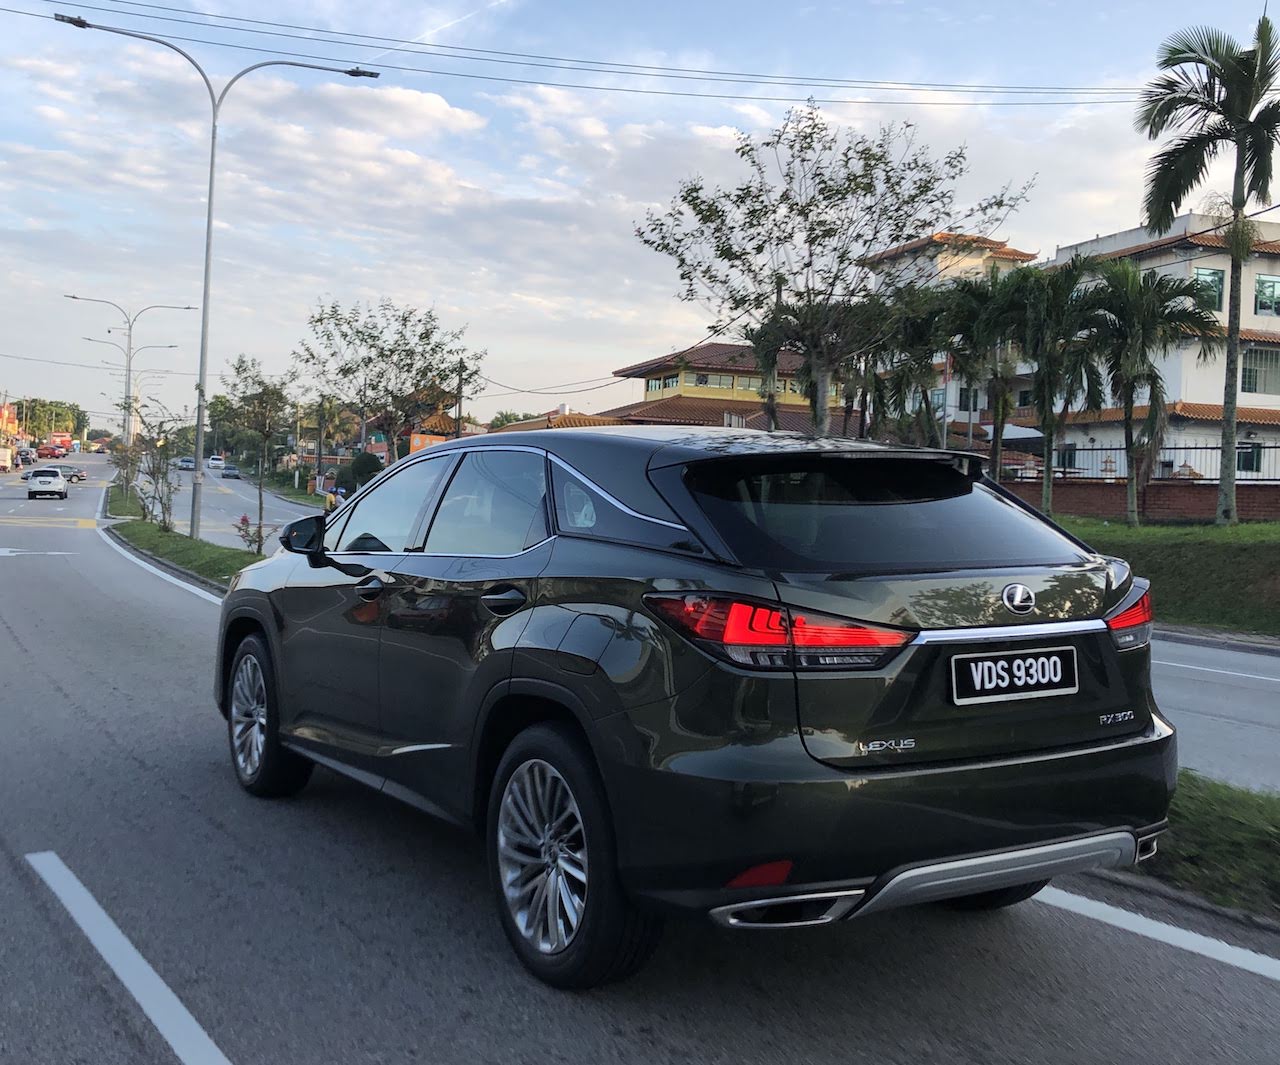 Rx300 malaysia lexus price 2021 Lexus